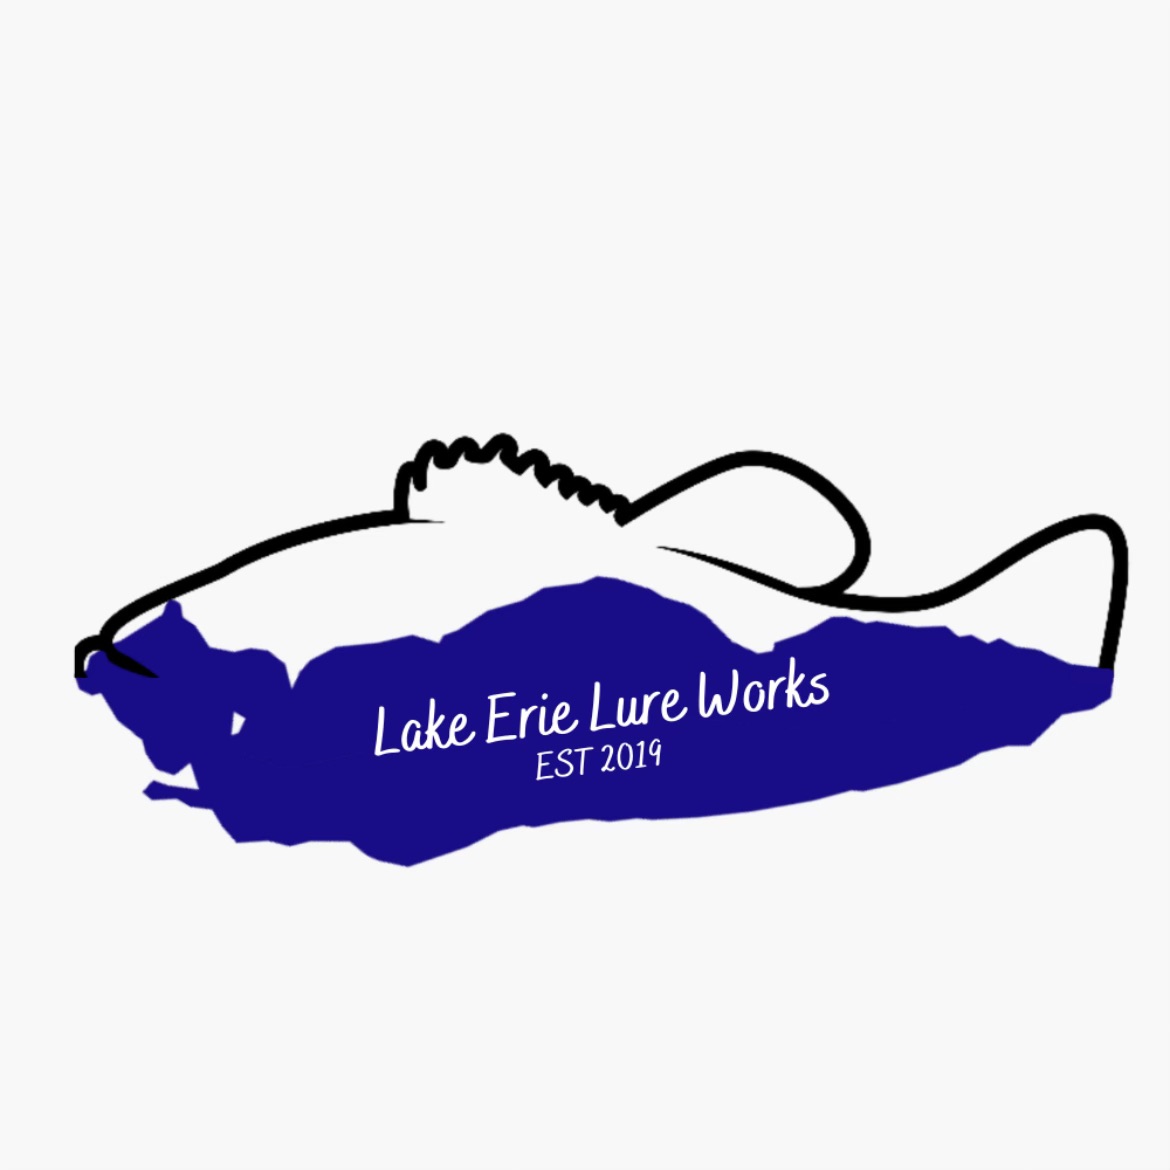 872-lake-erie-lure-works-16900708183041.jpg